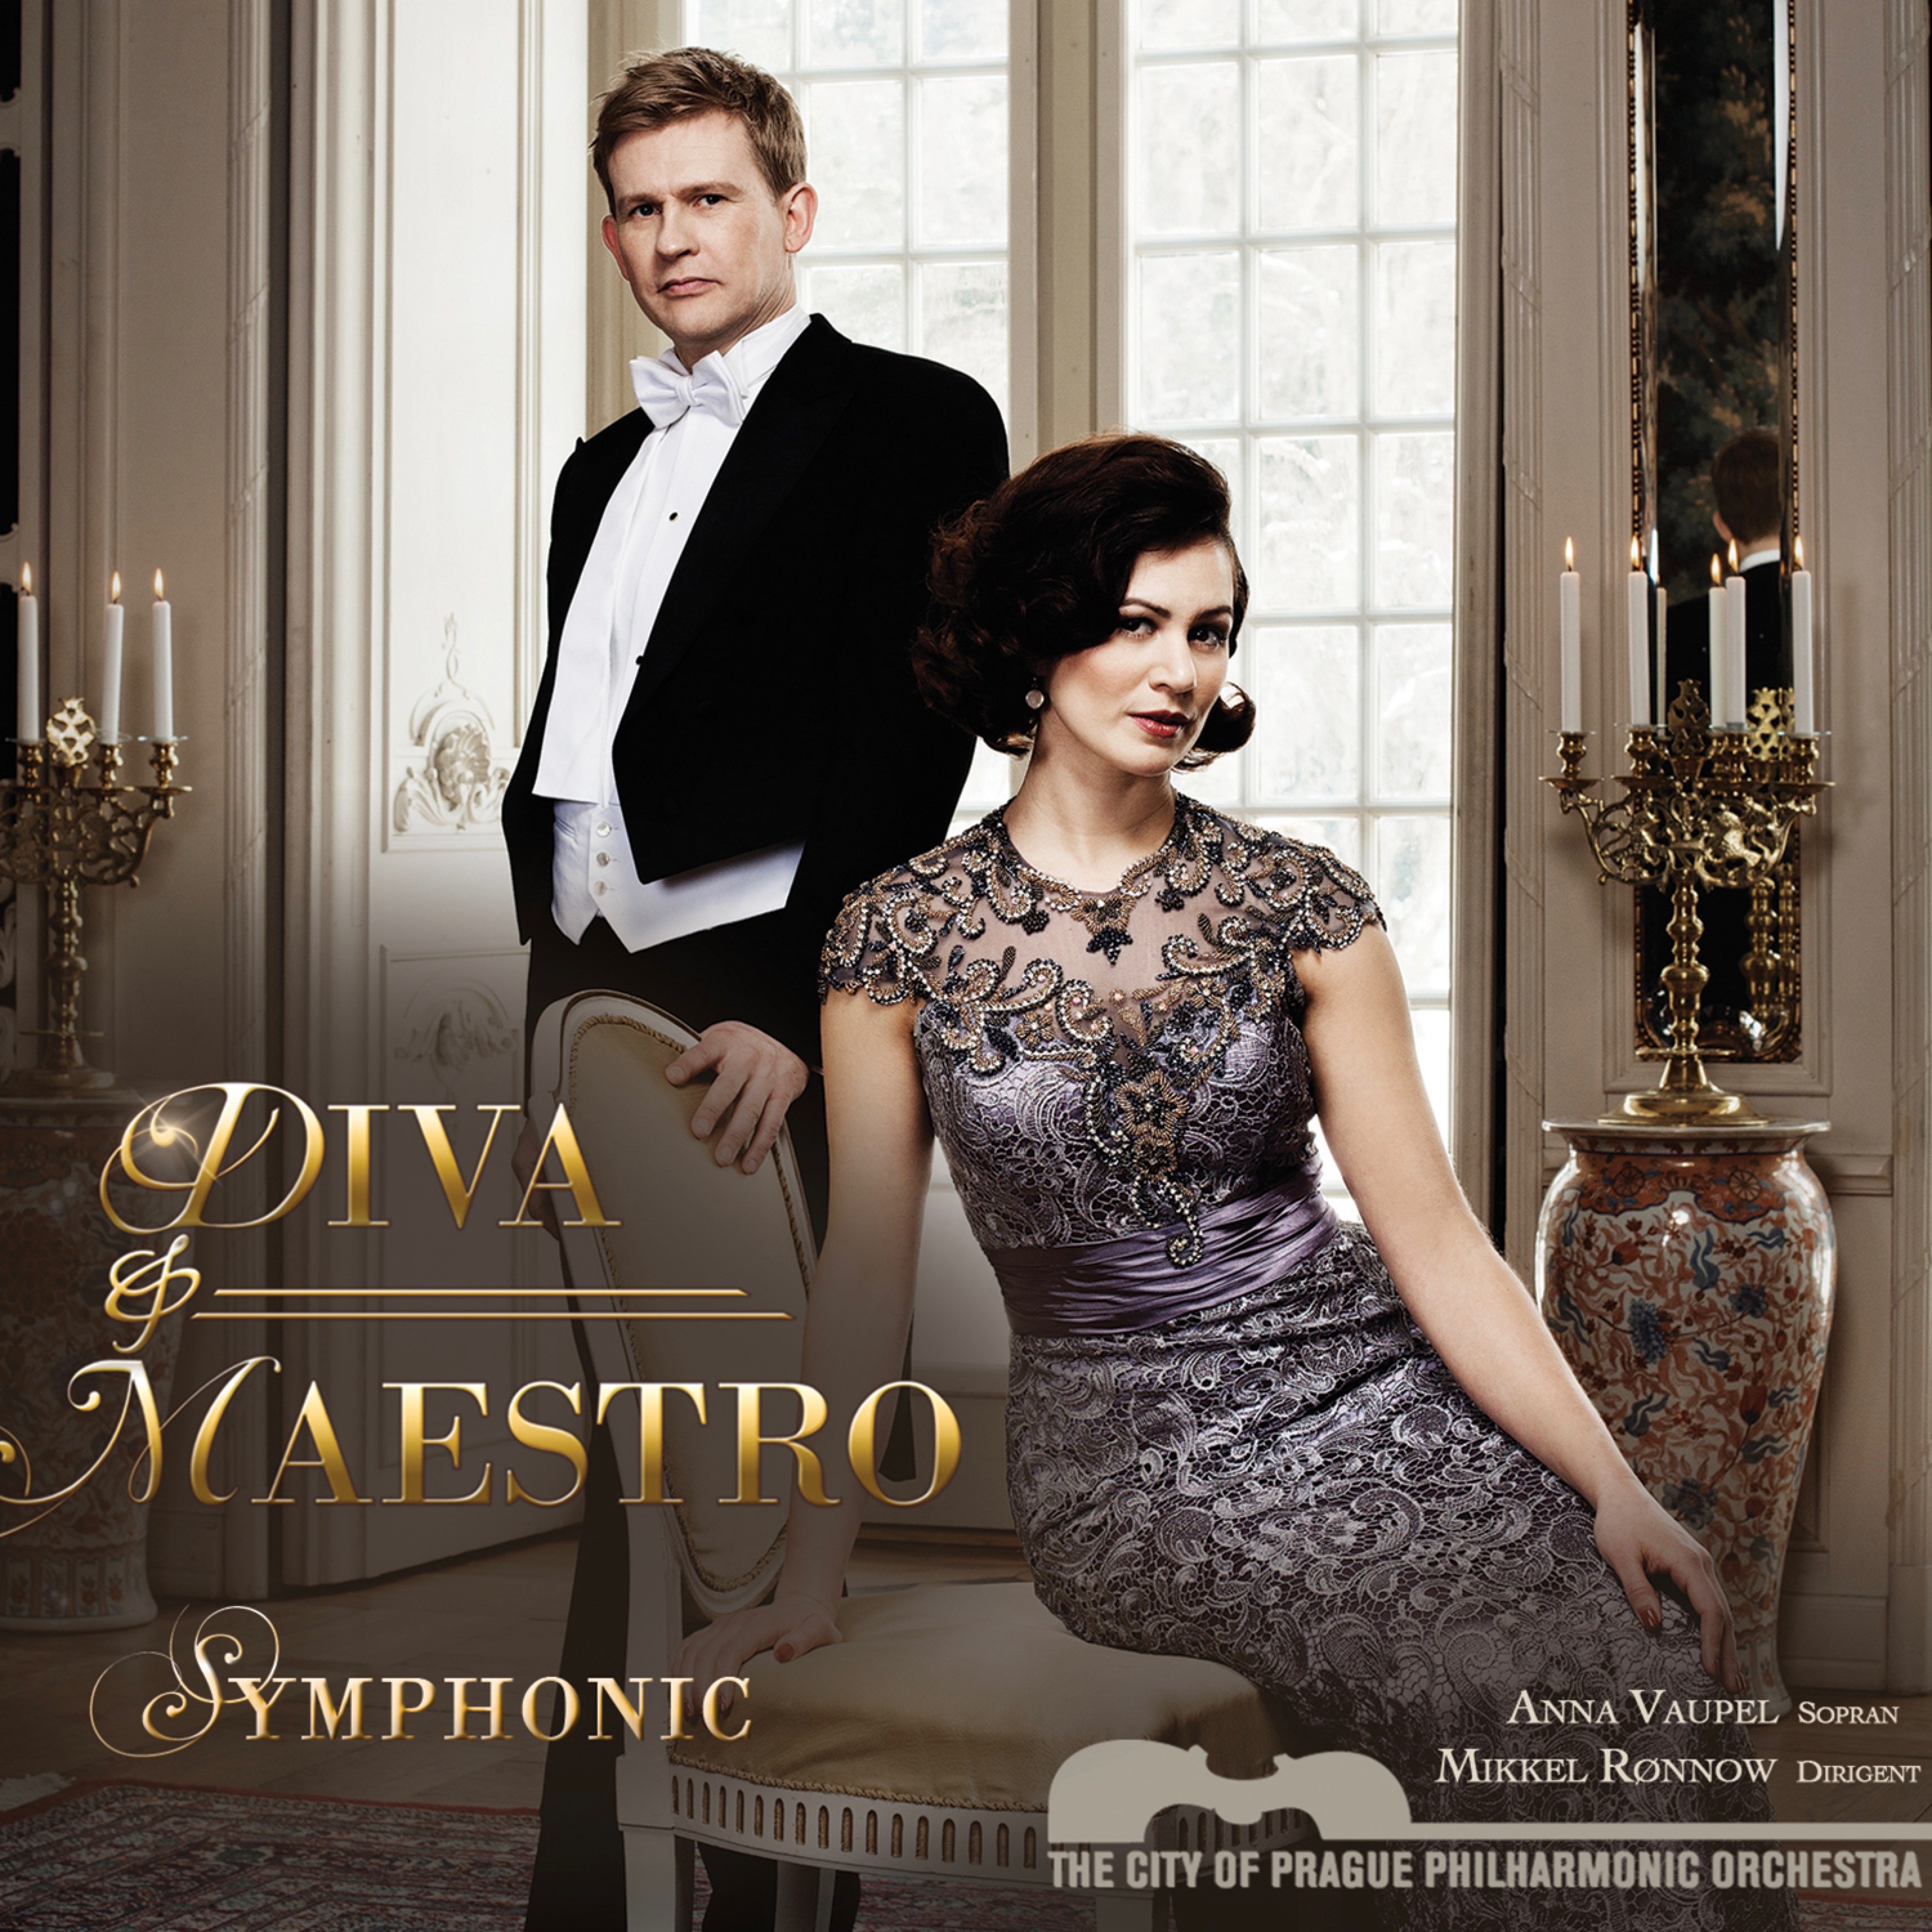 Symphonic [Diva & Maestro]